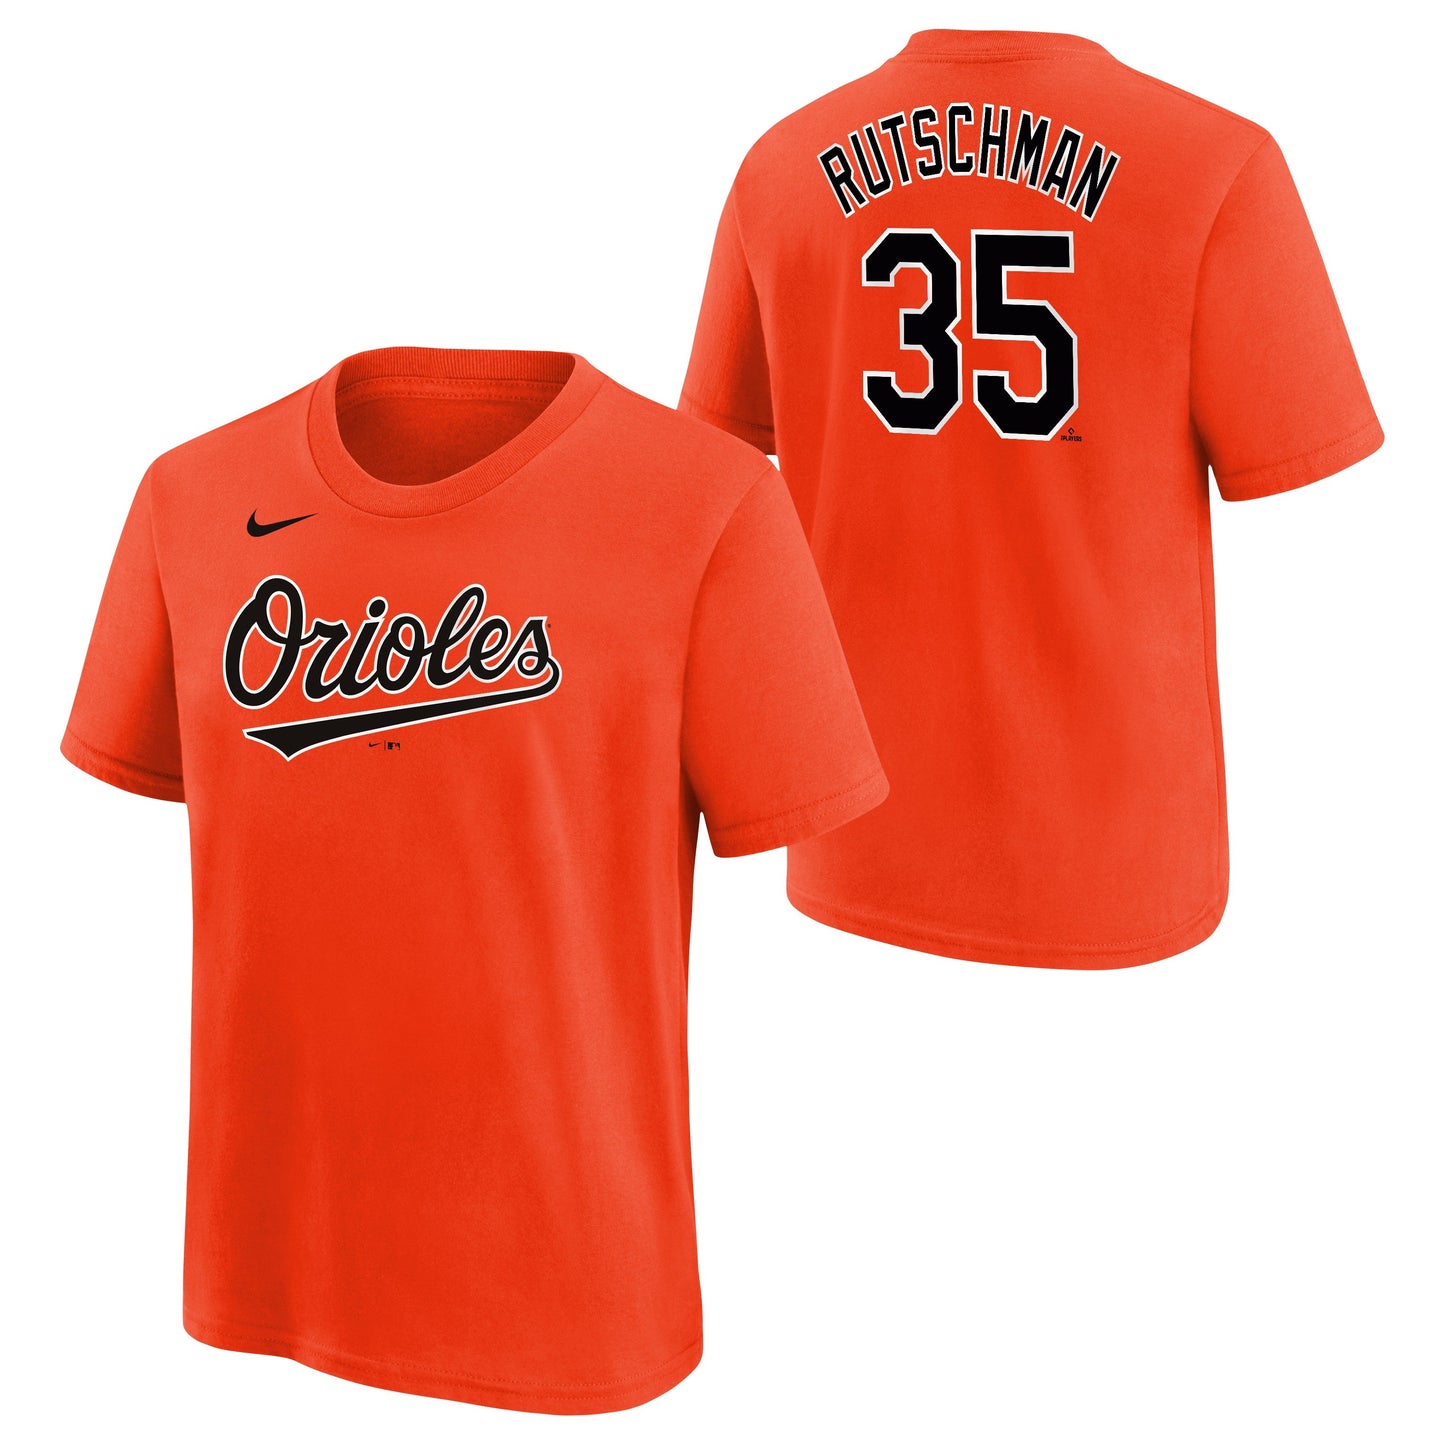 Baltimore Orioles Nike Orange #35 Rutschman Men's Player T-Shirt